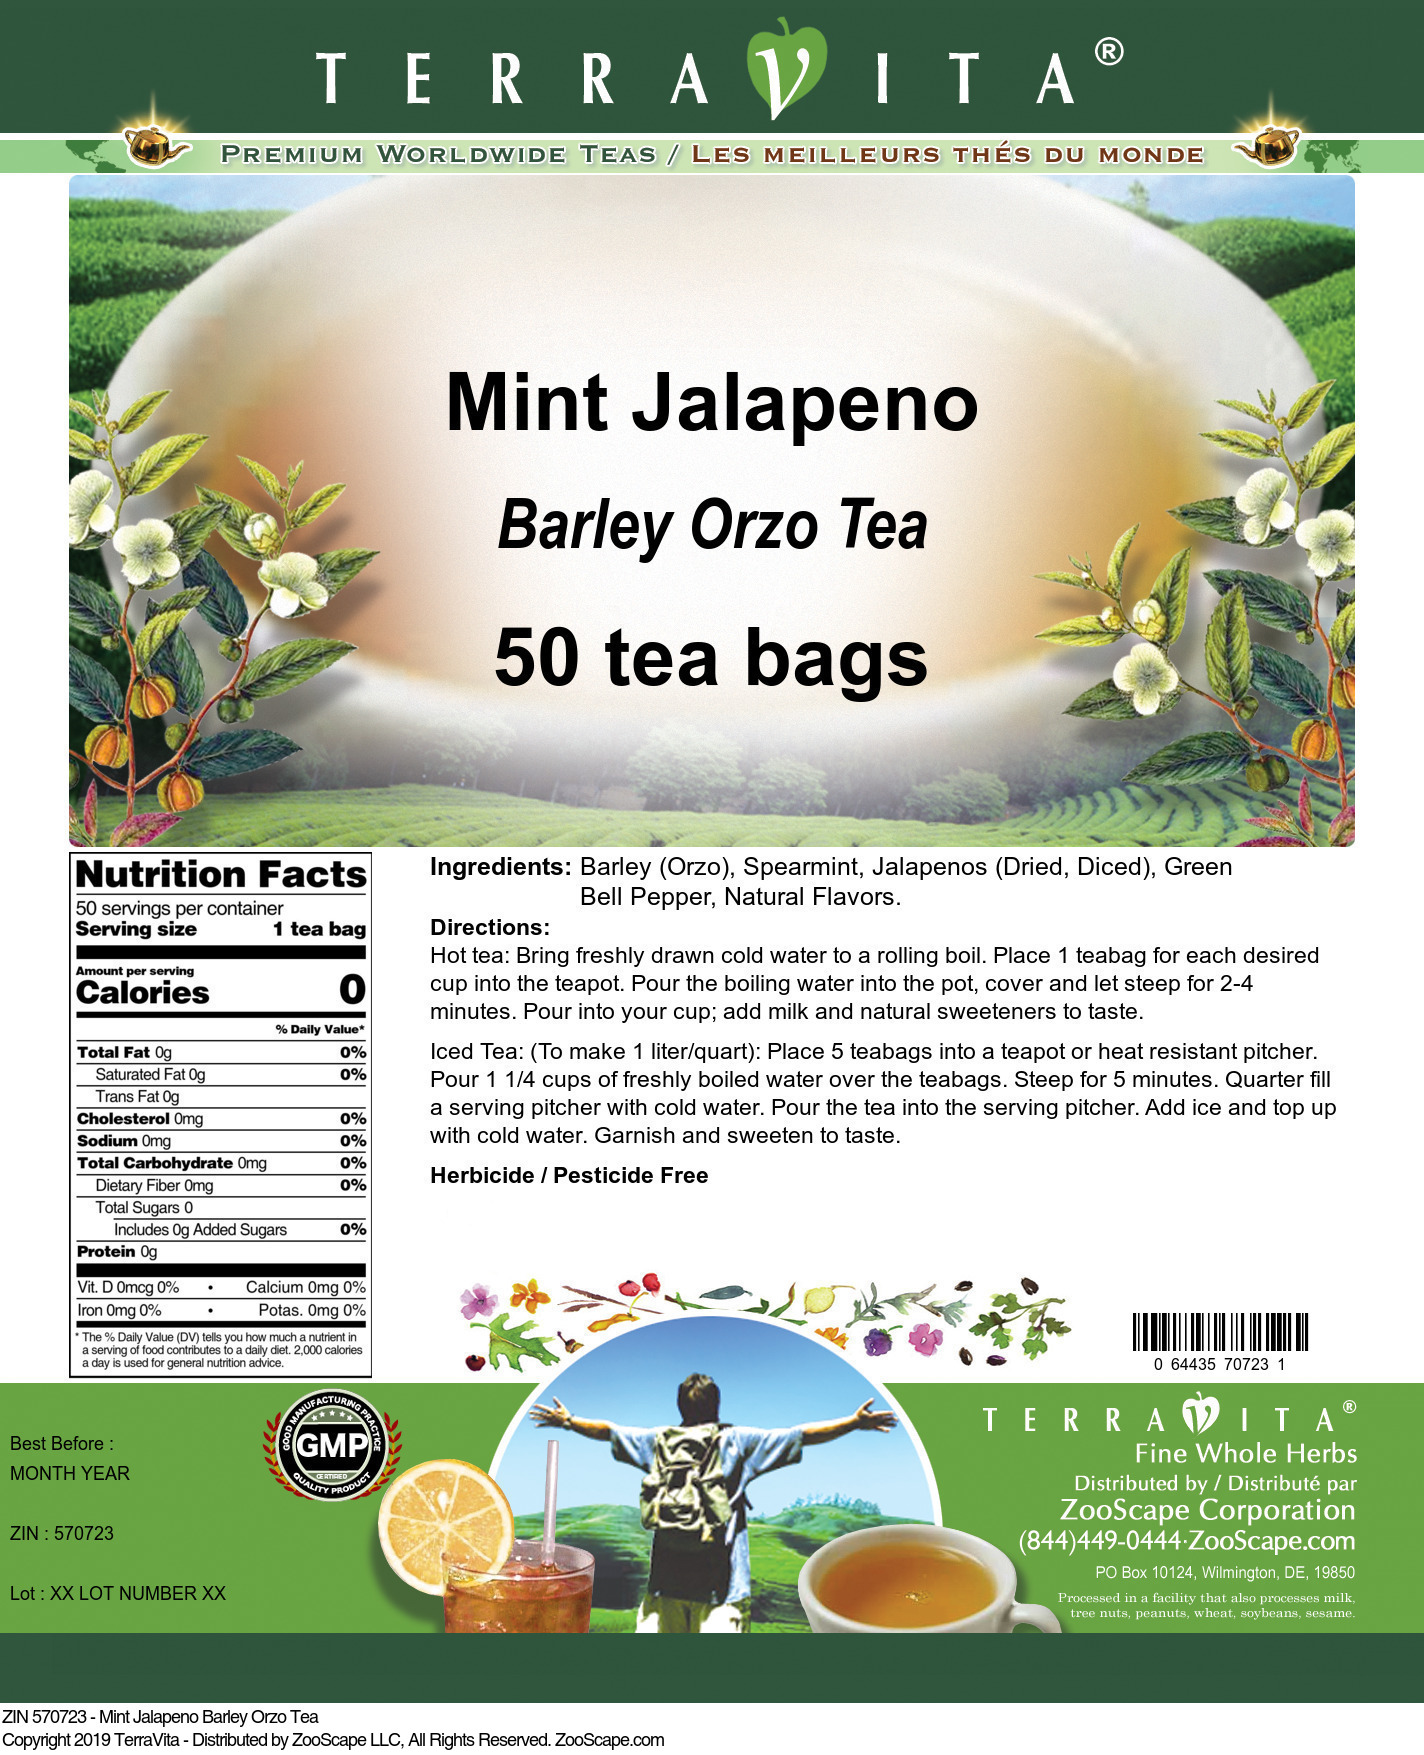 Mint Jalapeno Barley Orzo Tea - Label